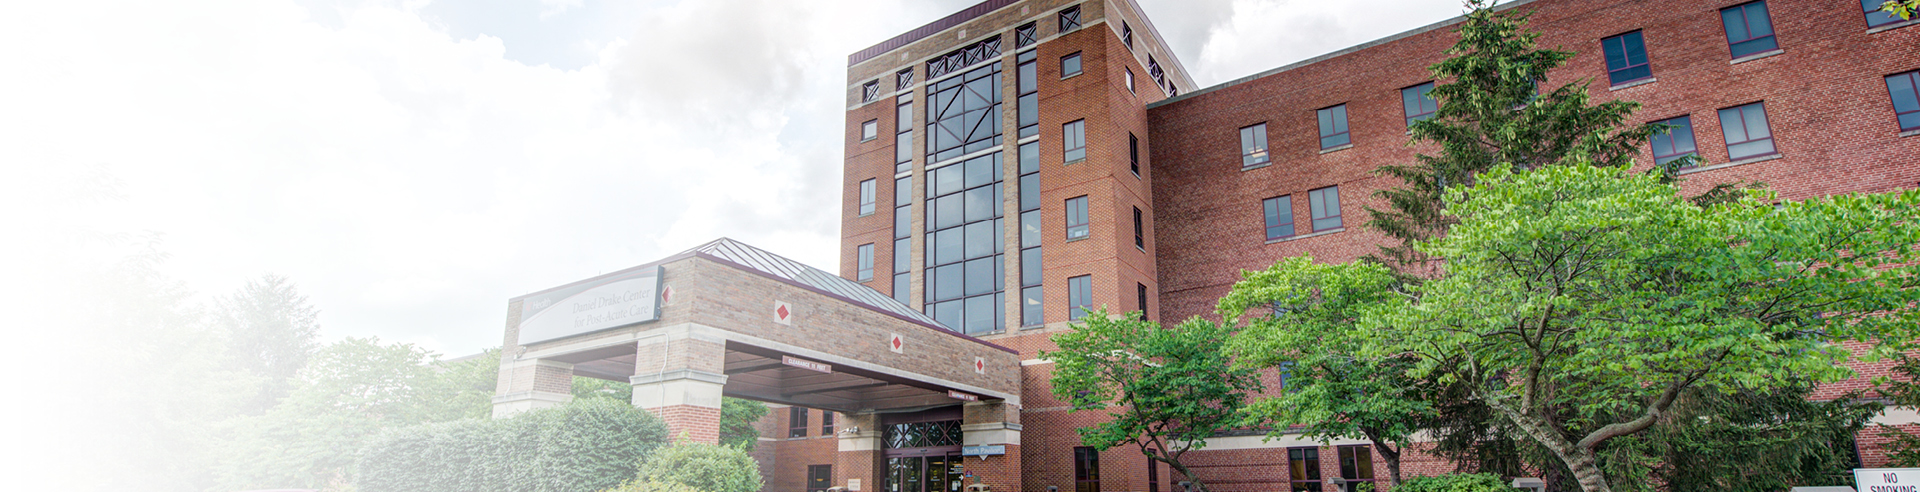 Encompass Health Rehabilitation Hospital of Cincinnati exterior image